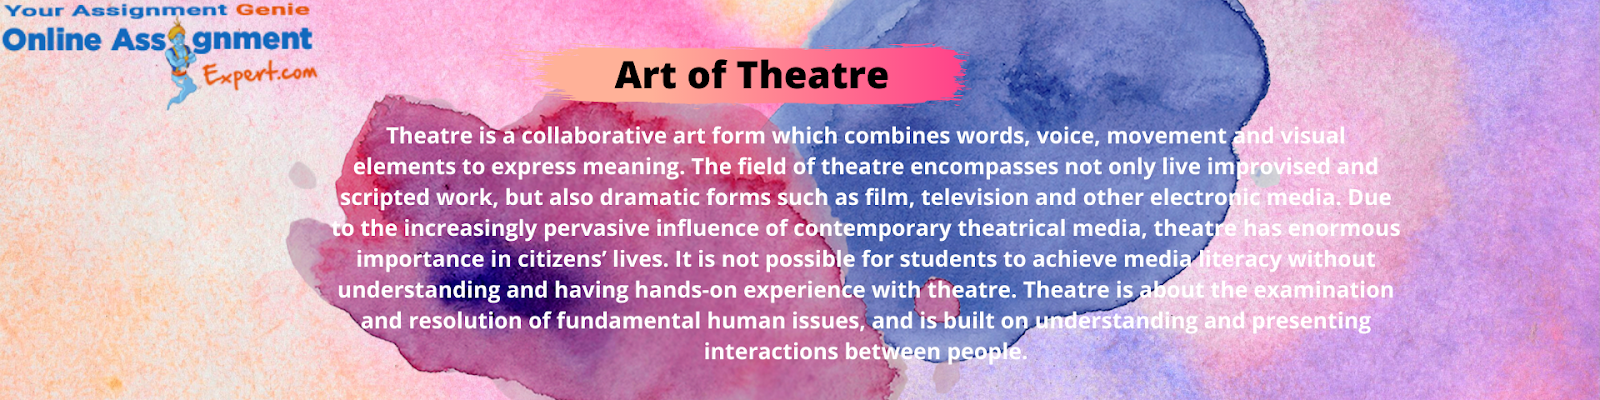 art of theater assignment help